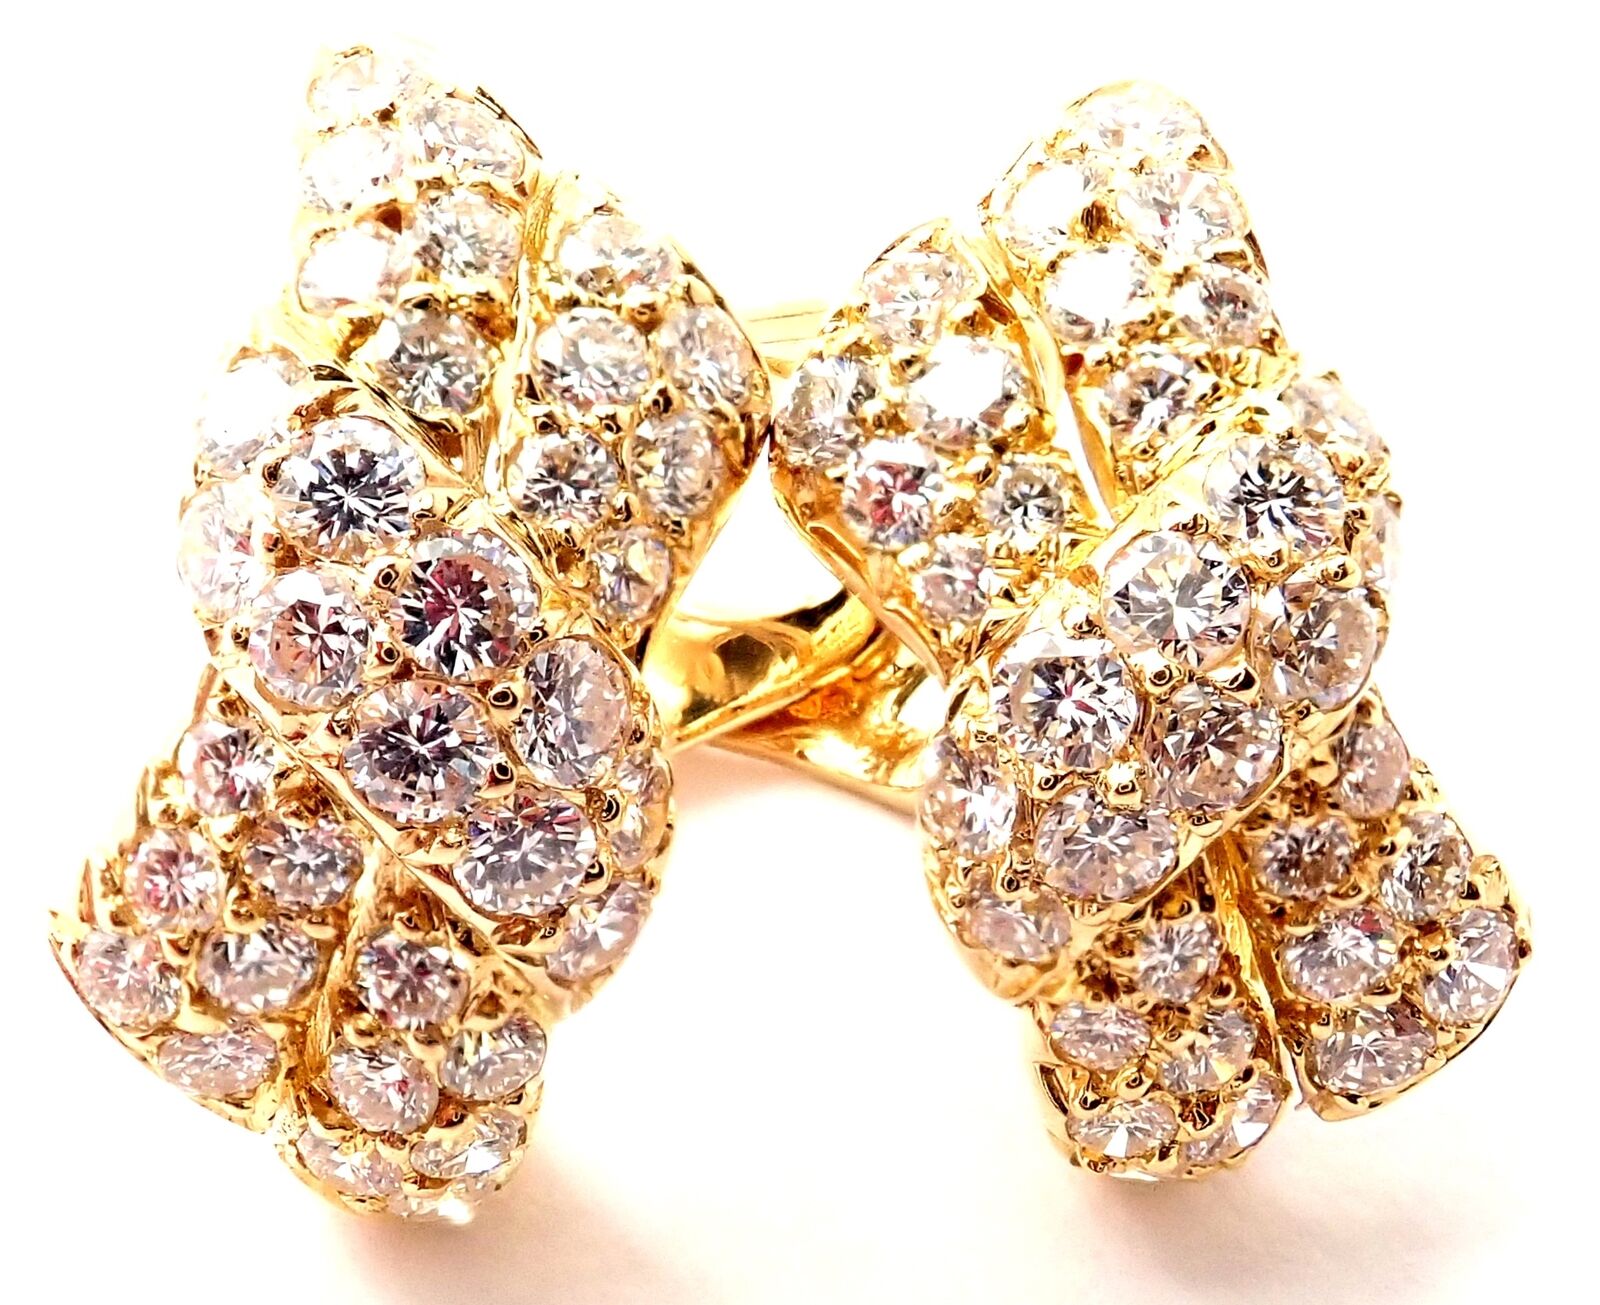 Van Cleef & Arpels Jewelry & Watches:Fine Jewelry:Earrings Rare! Authentic Van Cleef & Arpels 18k Yellow Gold Diamond Bow Earrings Paper